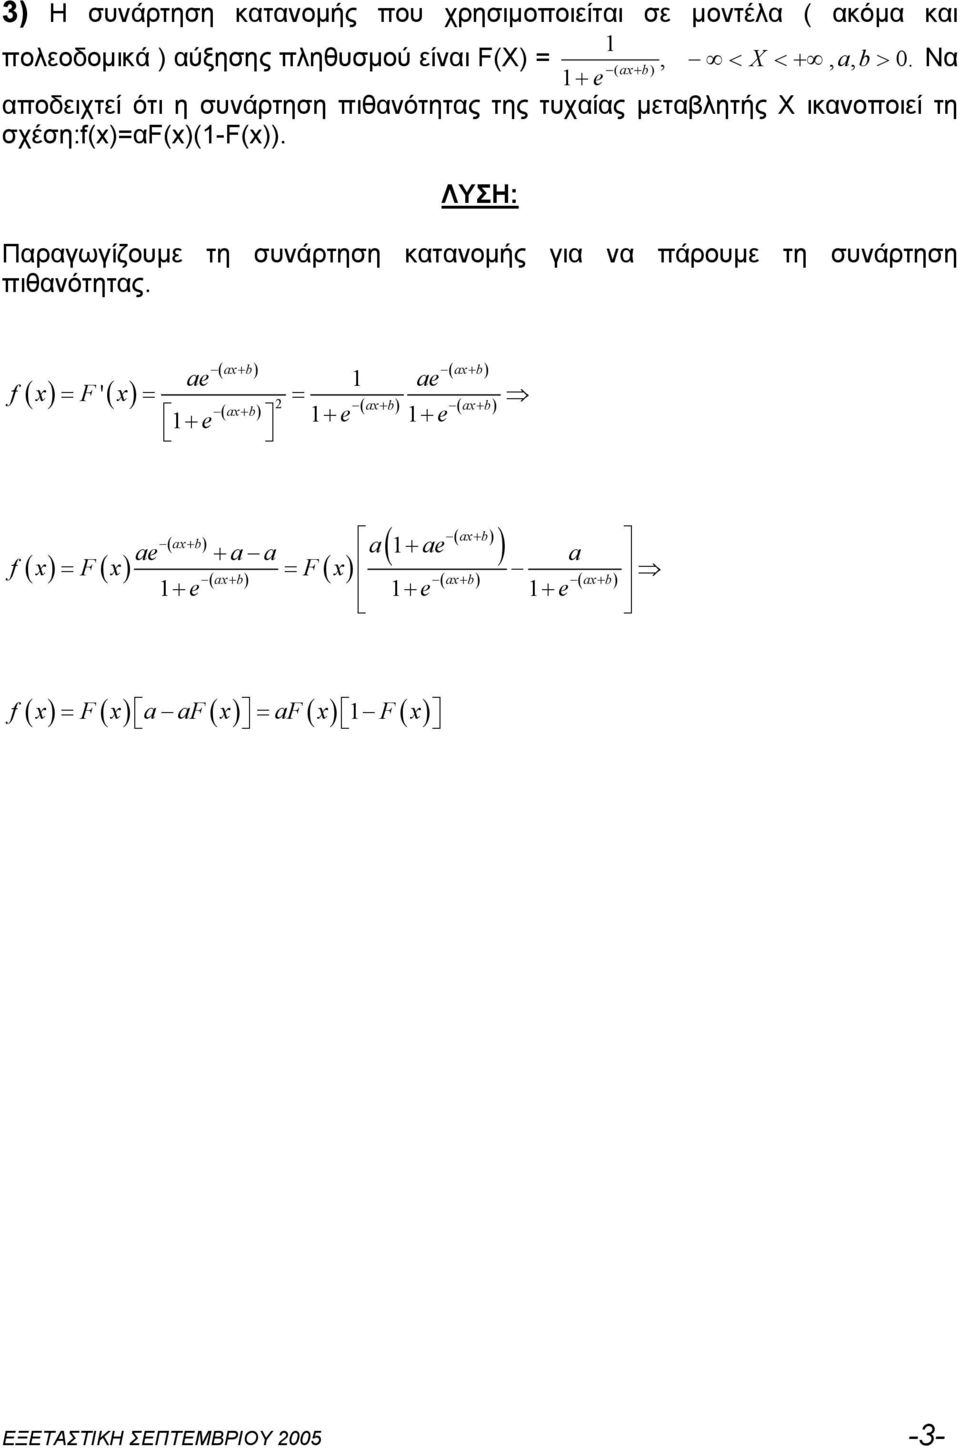 Nα a b e αποδειχτεί ότι η συνάρτηση πιθανότητας της τυχαίας μεταβλητής Χ ικανοποιεί τη σχέση:fαf-f.